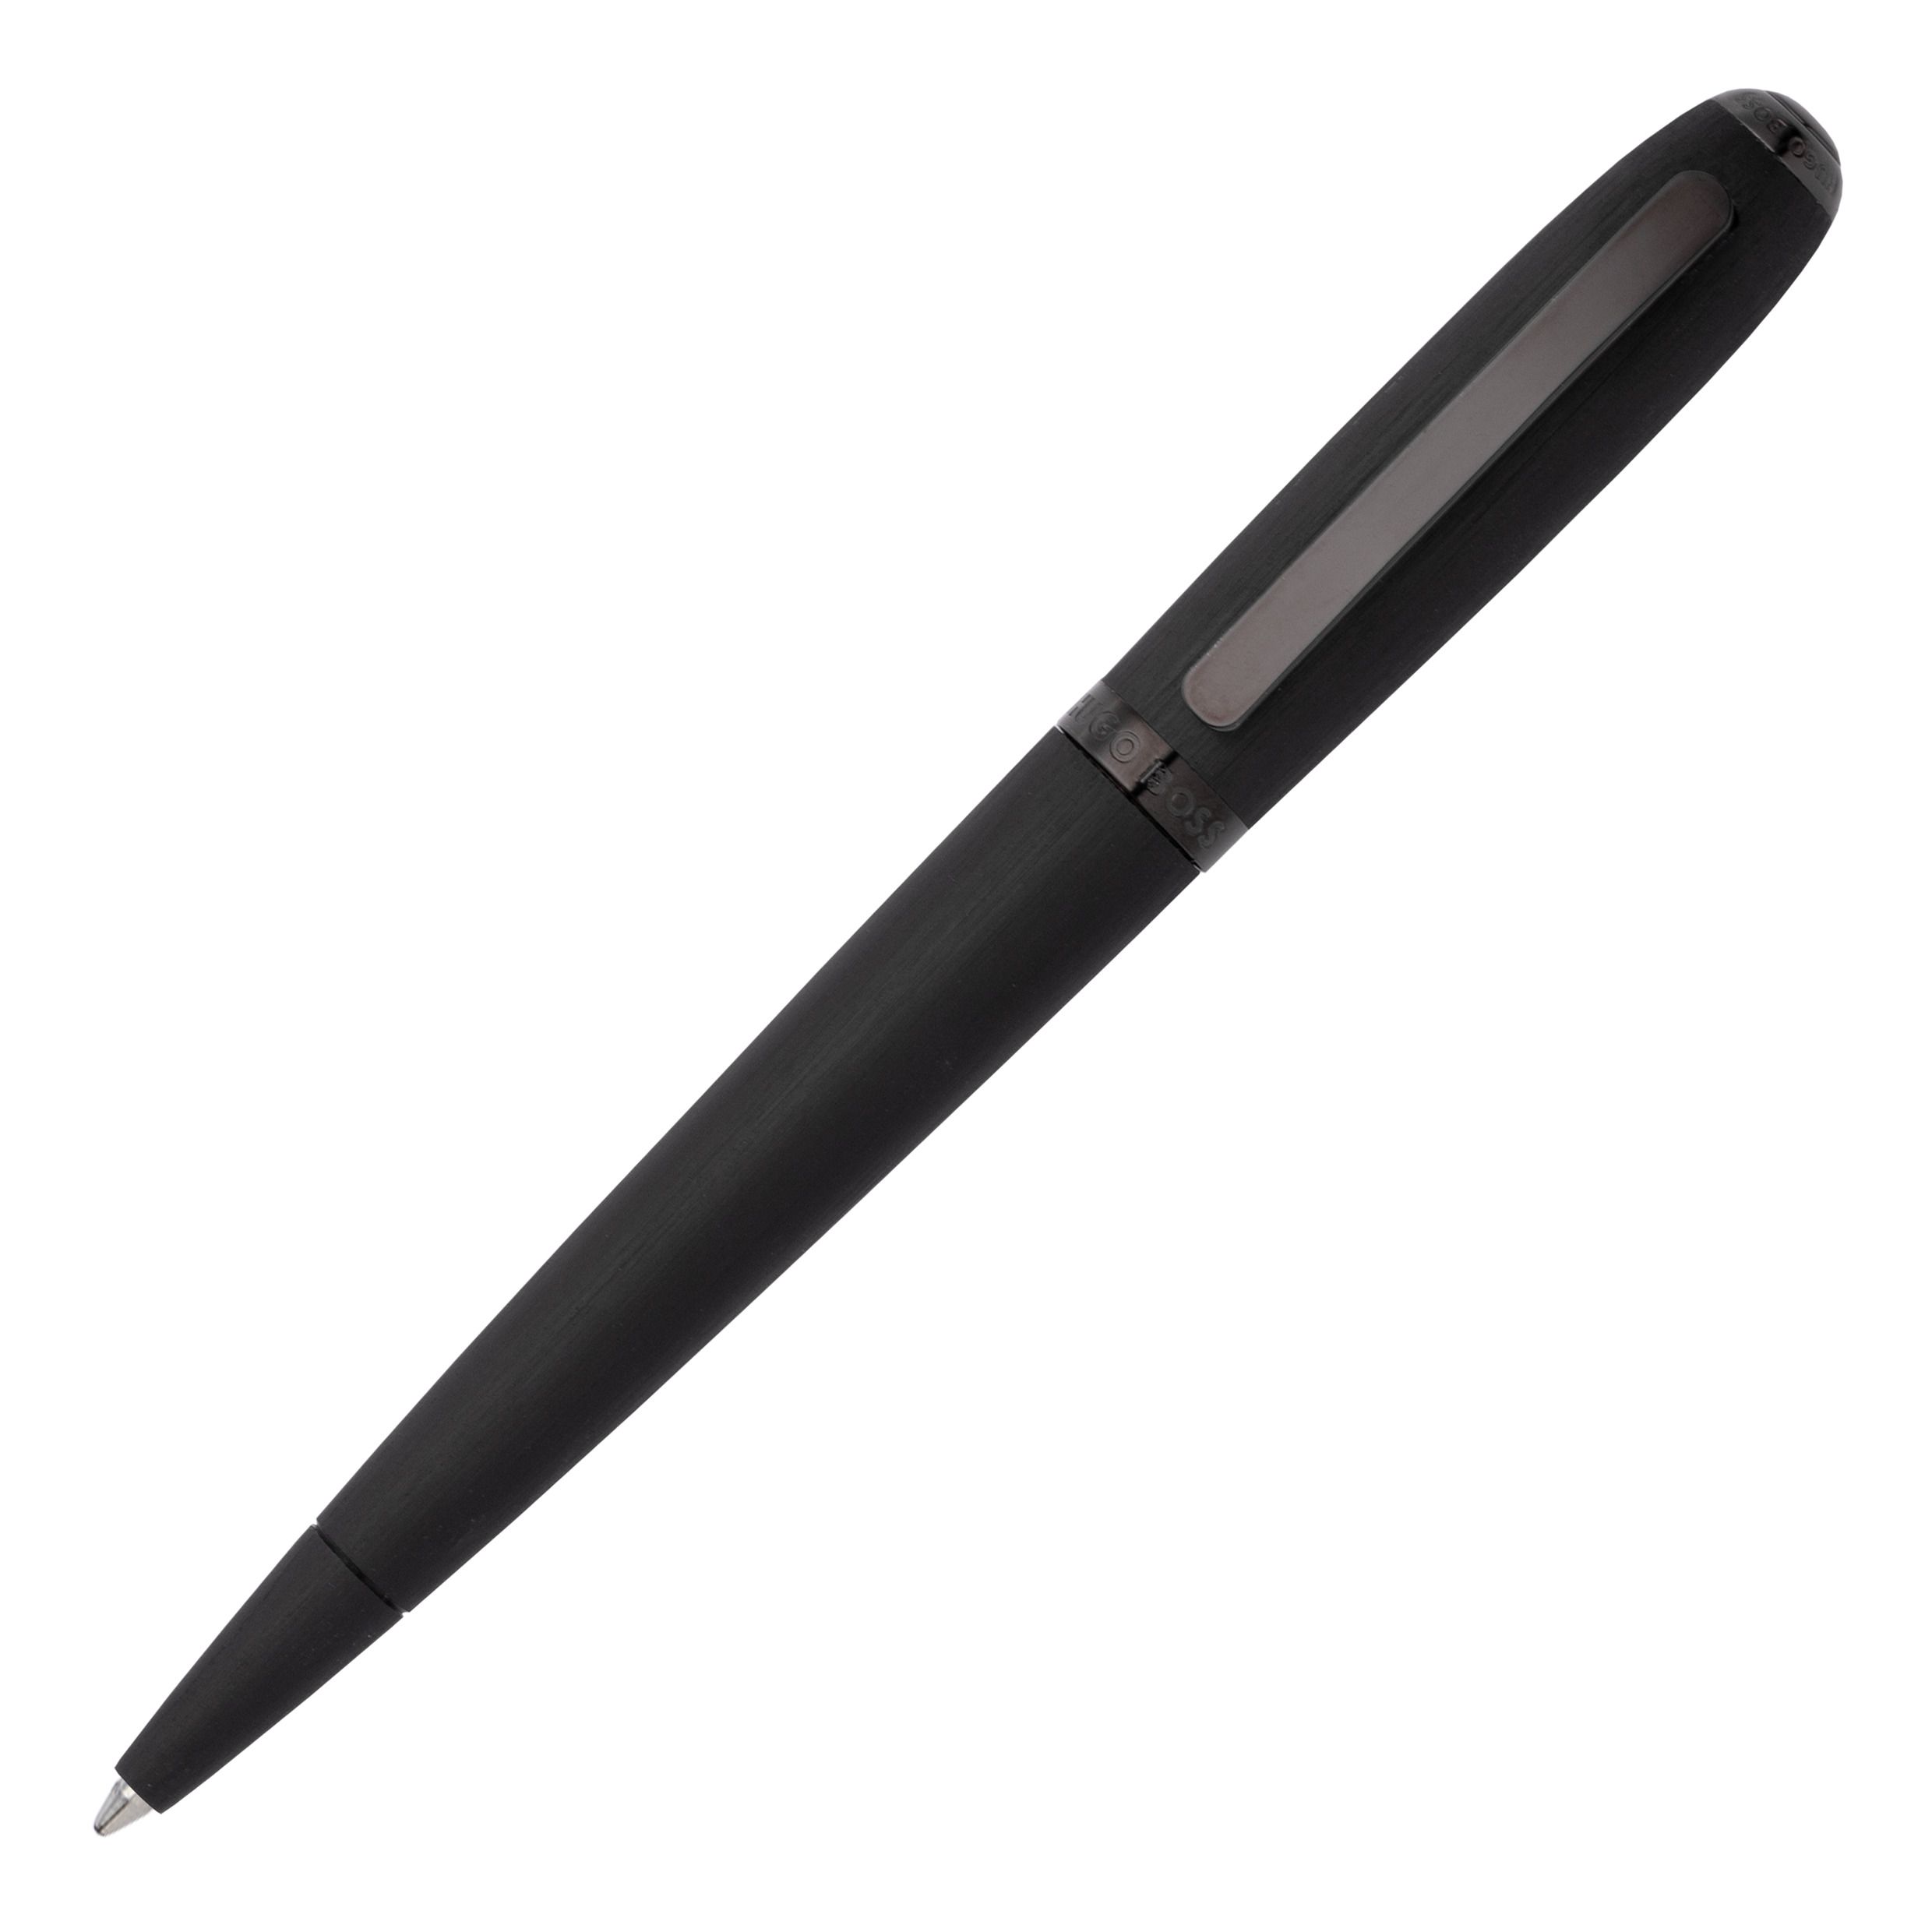 Hugo Boss Contour Brushed Black Ball Pen